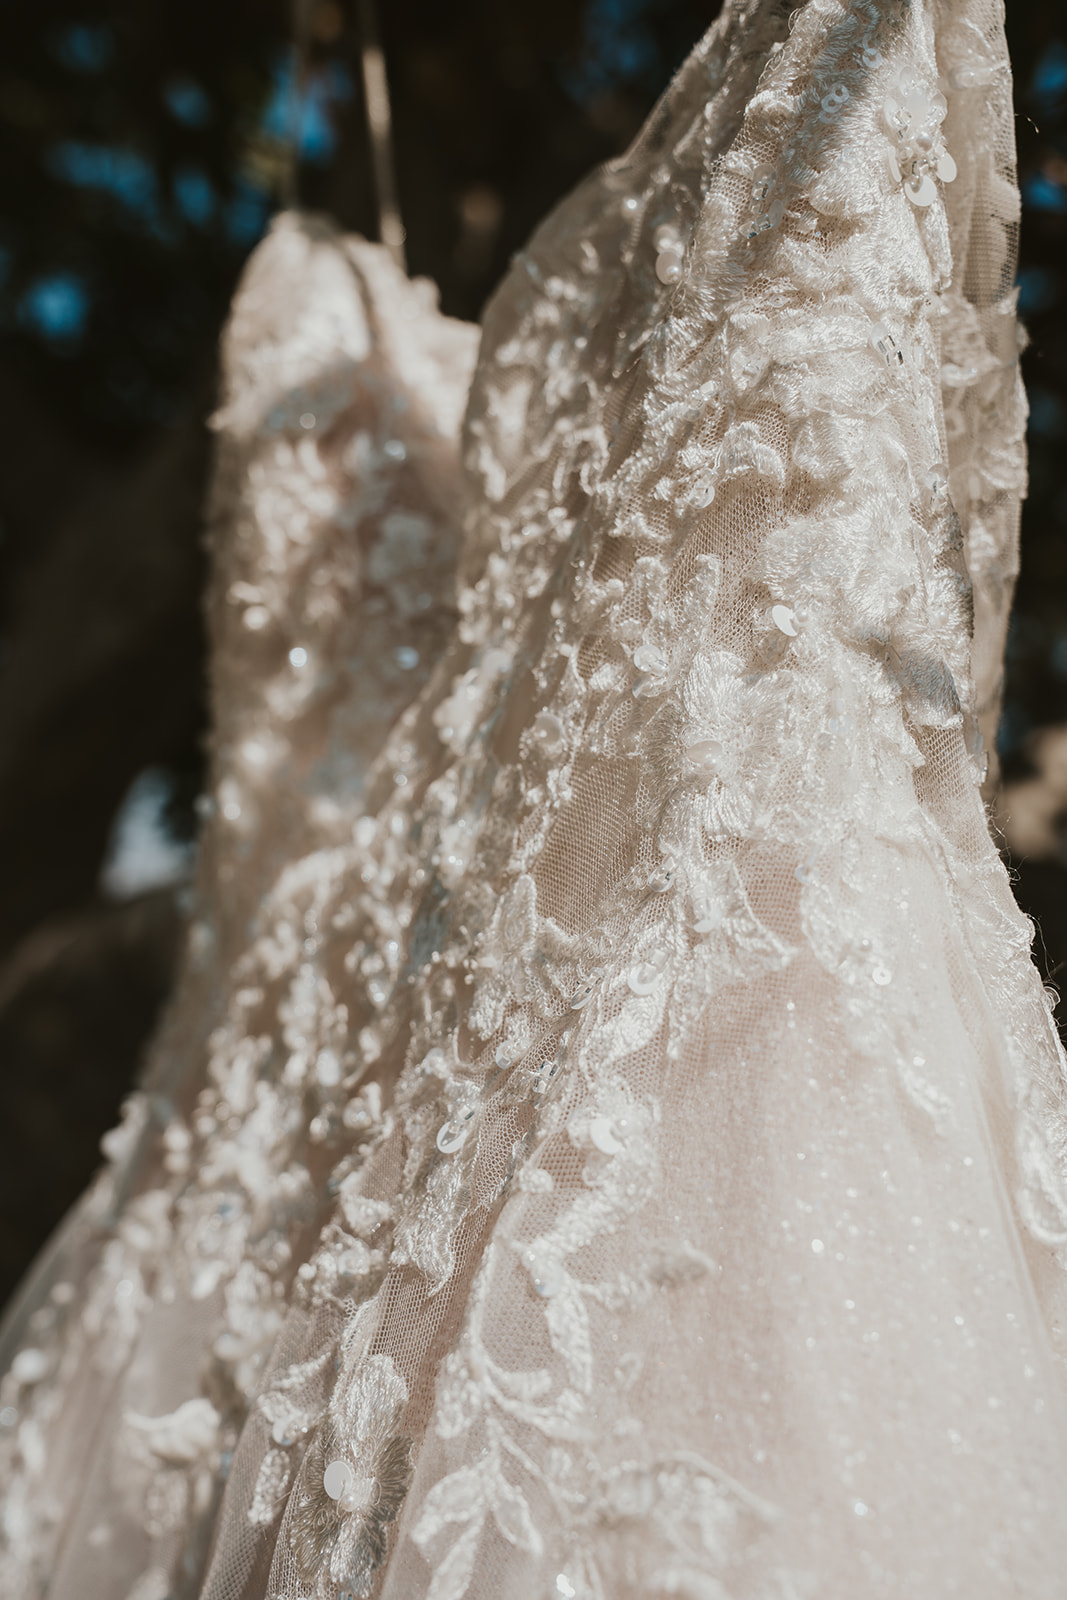 Bride's wedding dress